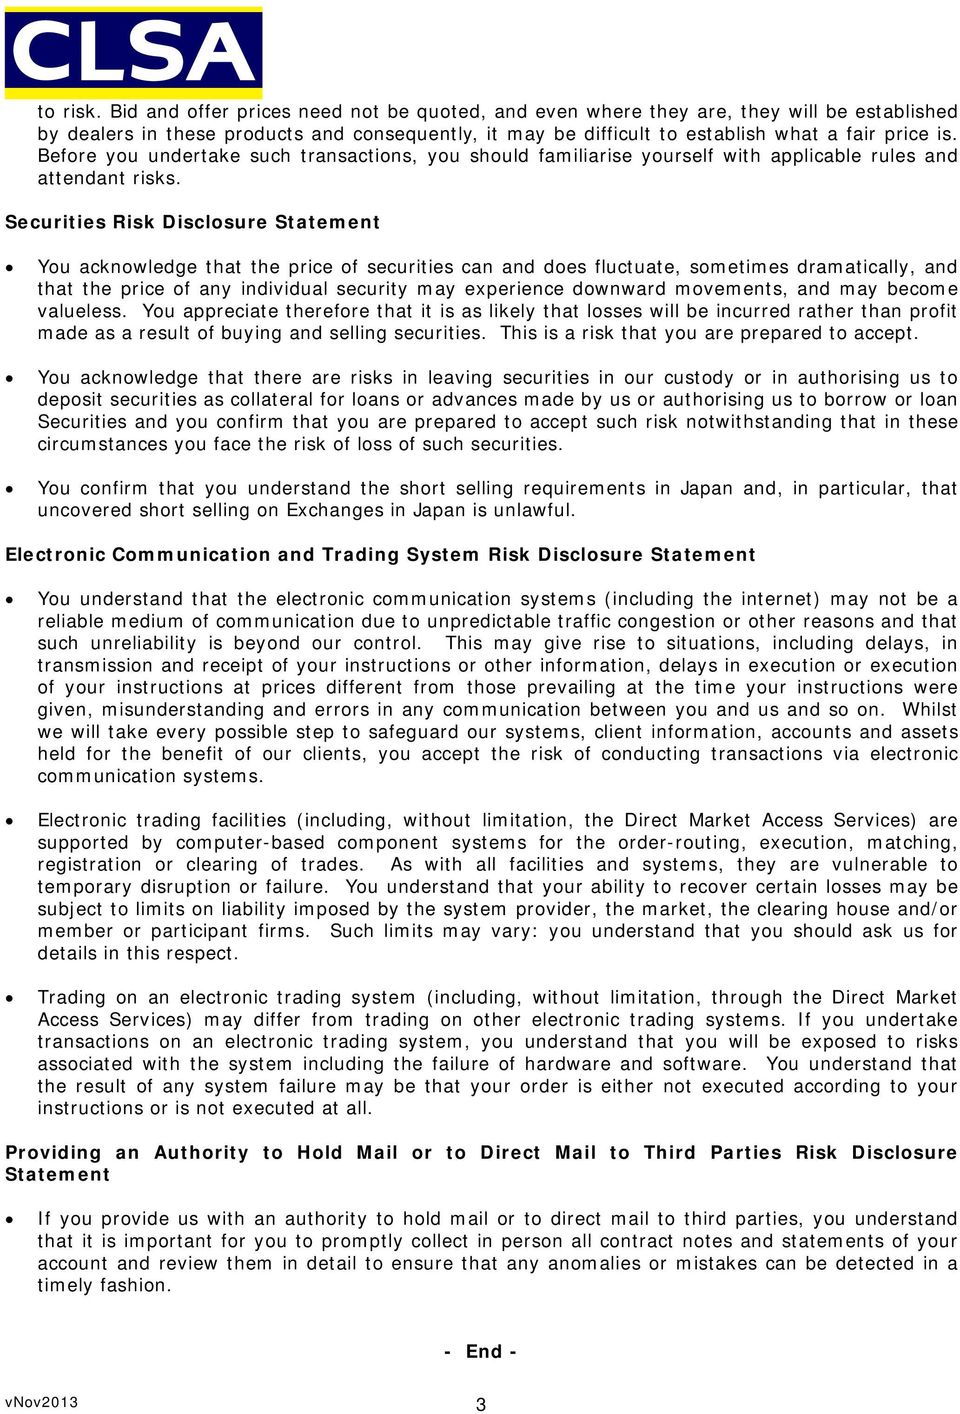 Hong Kong Market Annex Risk Disclosure Statement Pdf Free Download